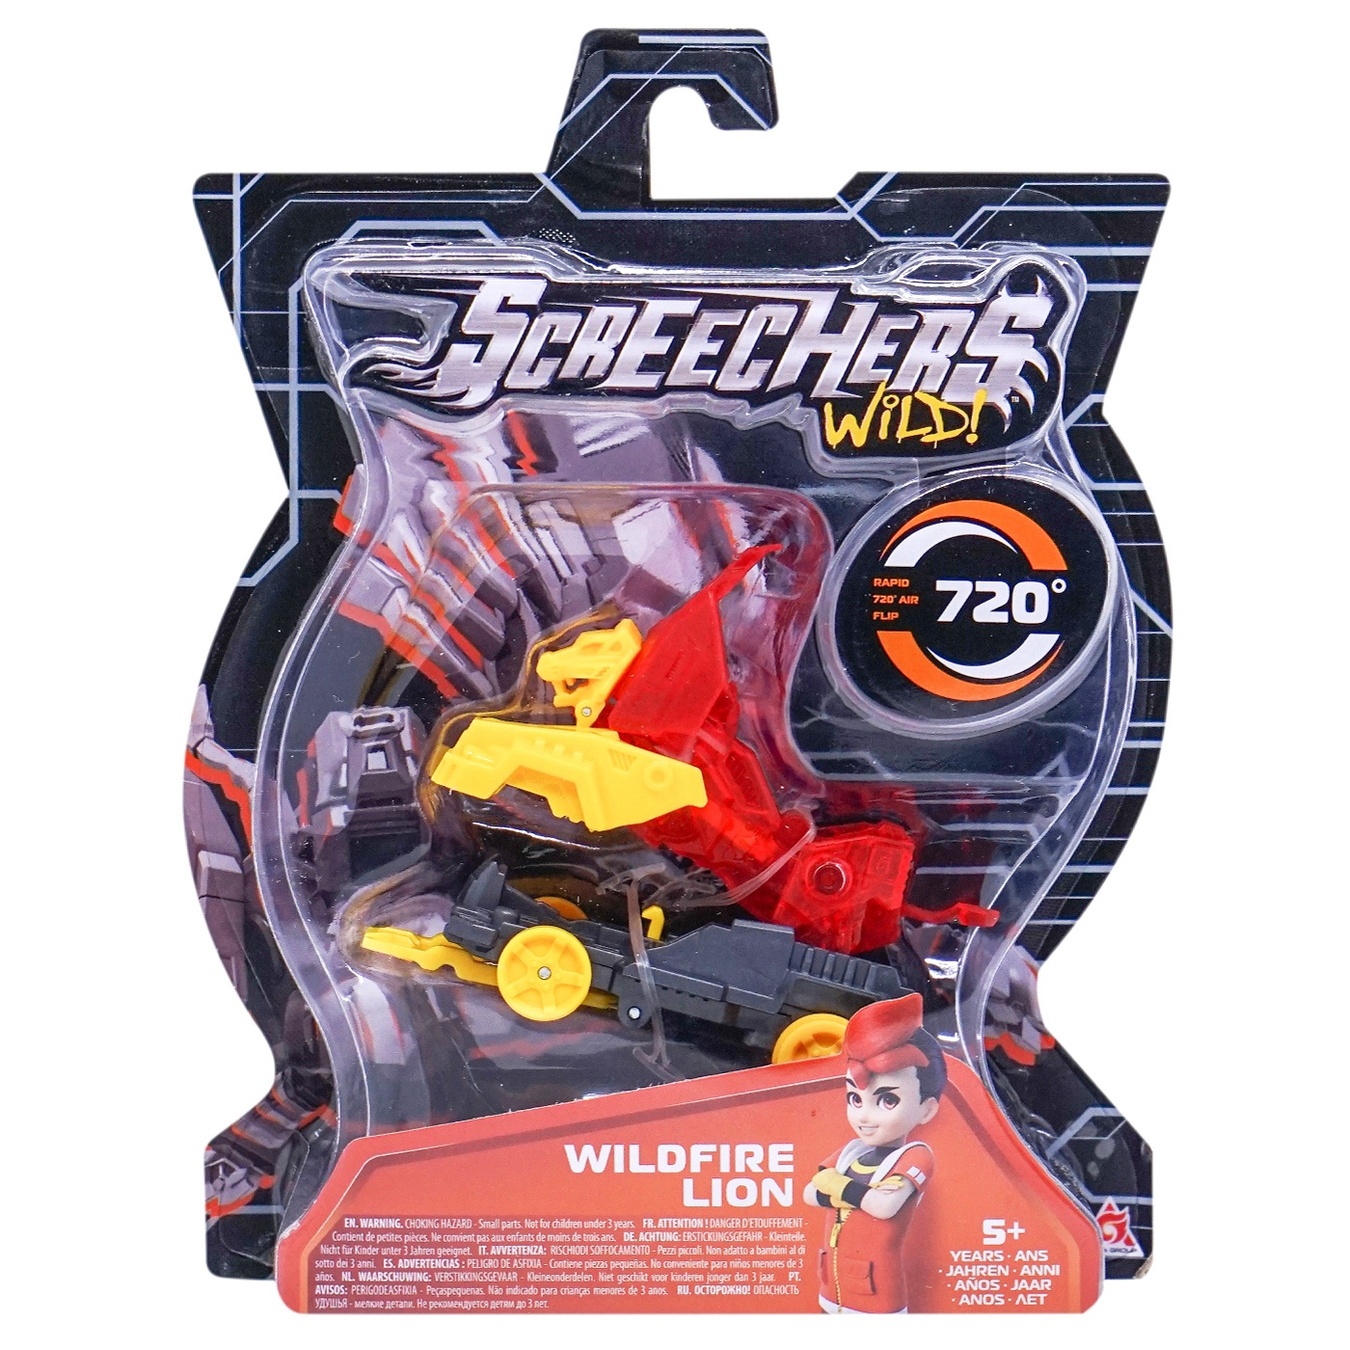 Screechers Wild transforming car! S4 l0 - airstrike needles